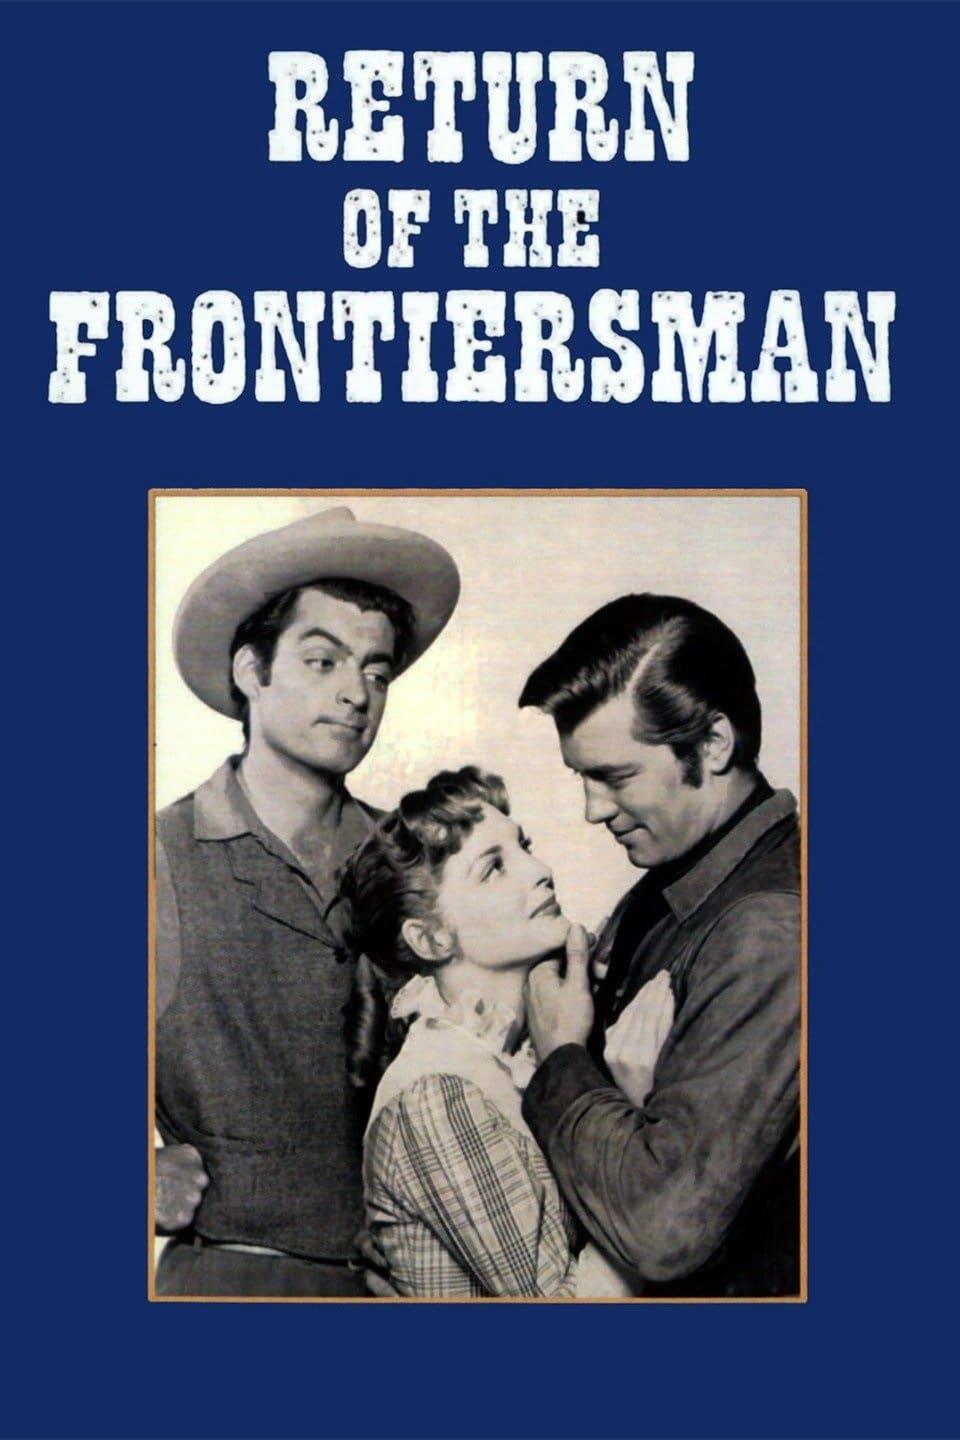 Return of the Frontiersman poster